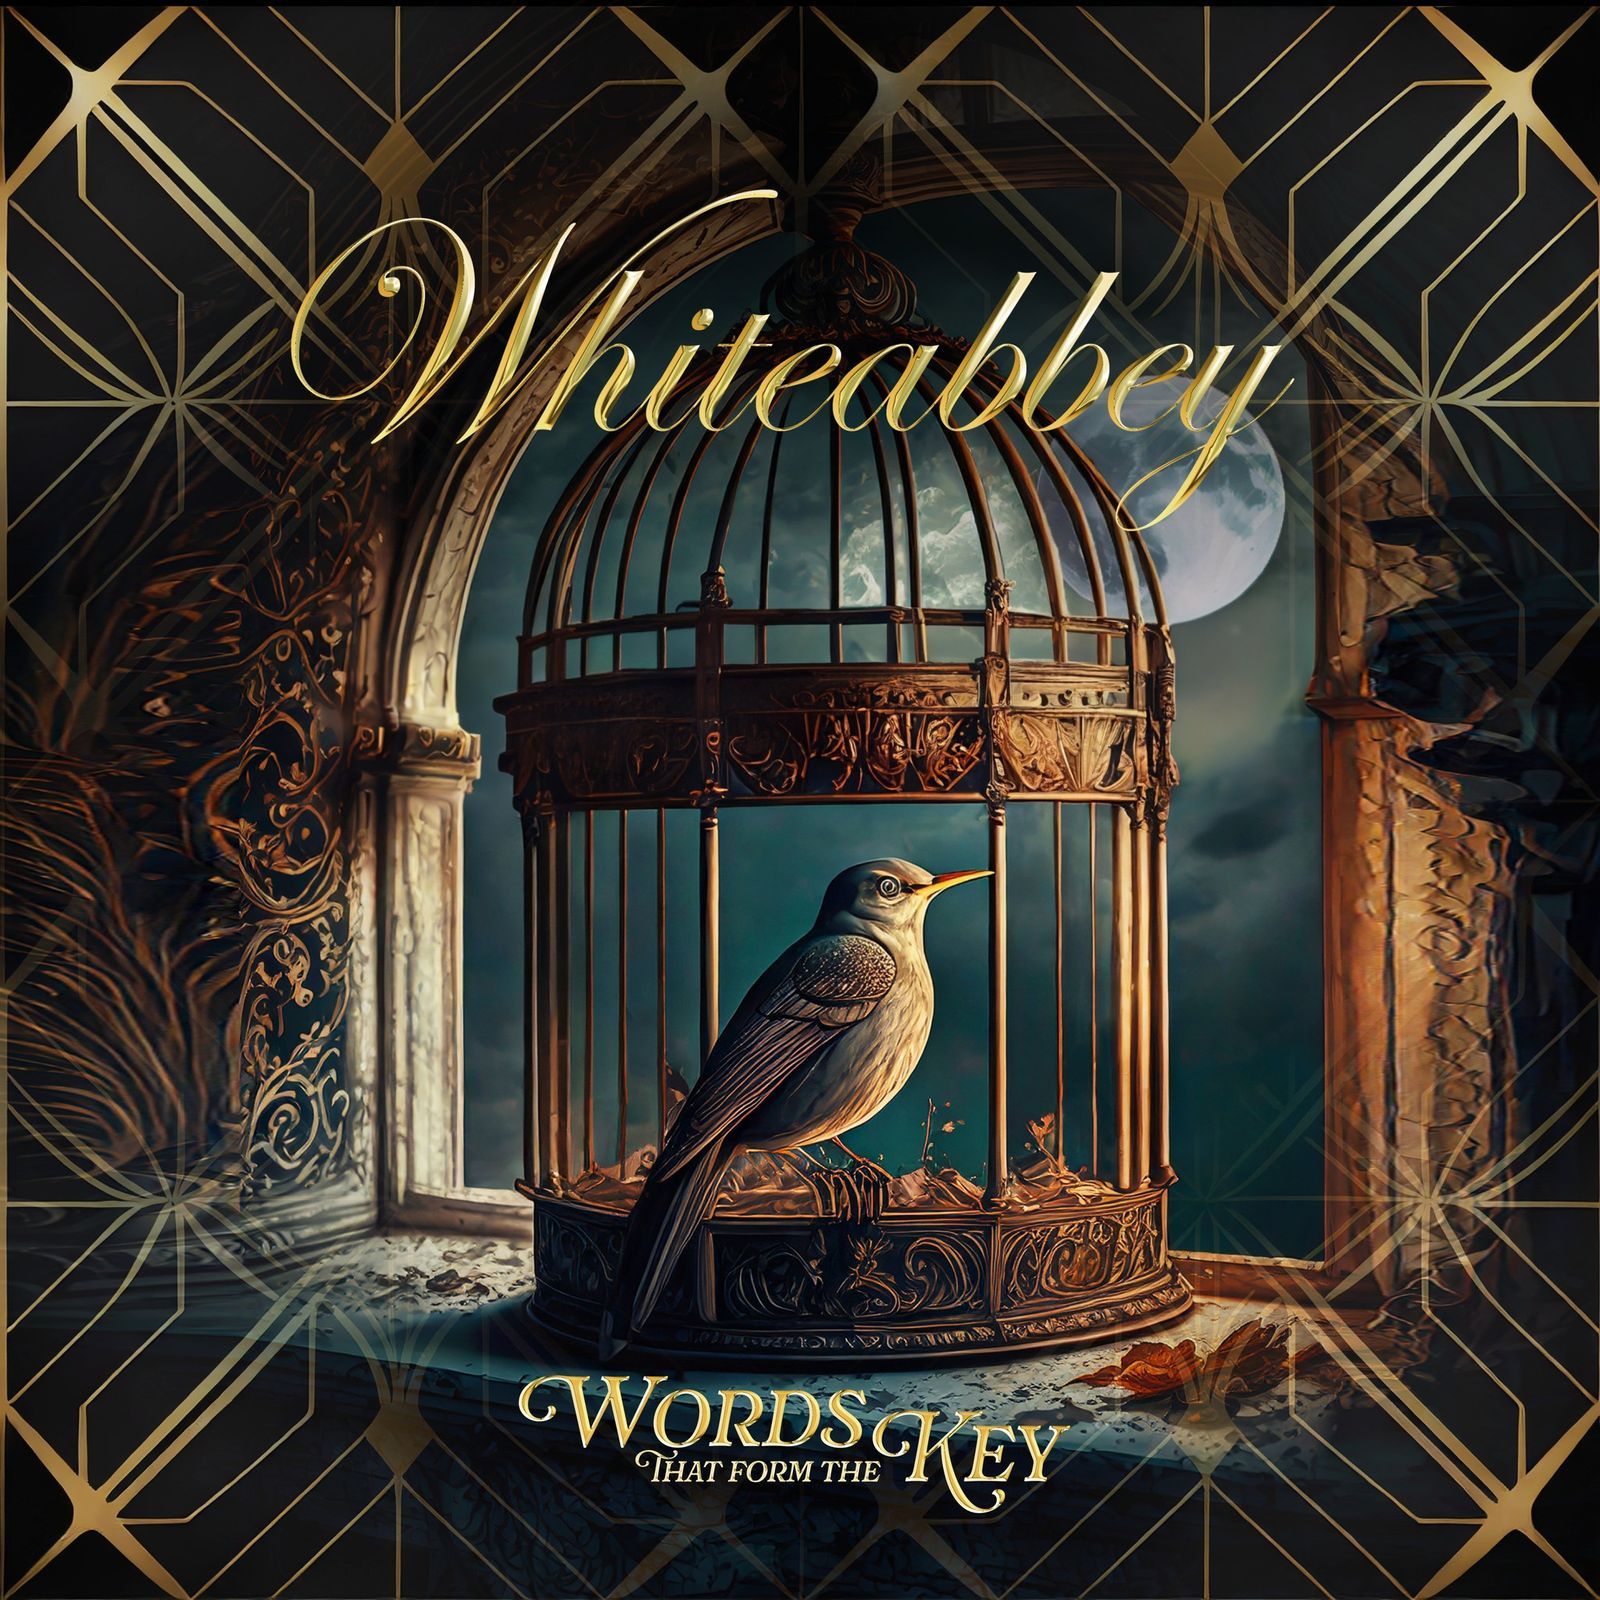 Whiteabbey - Reality (clip)